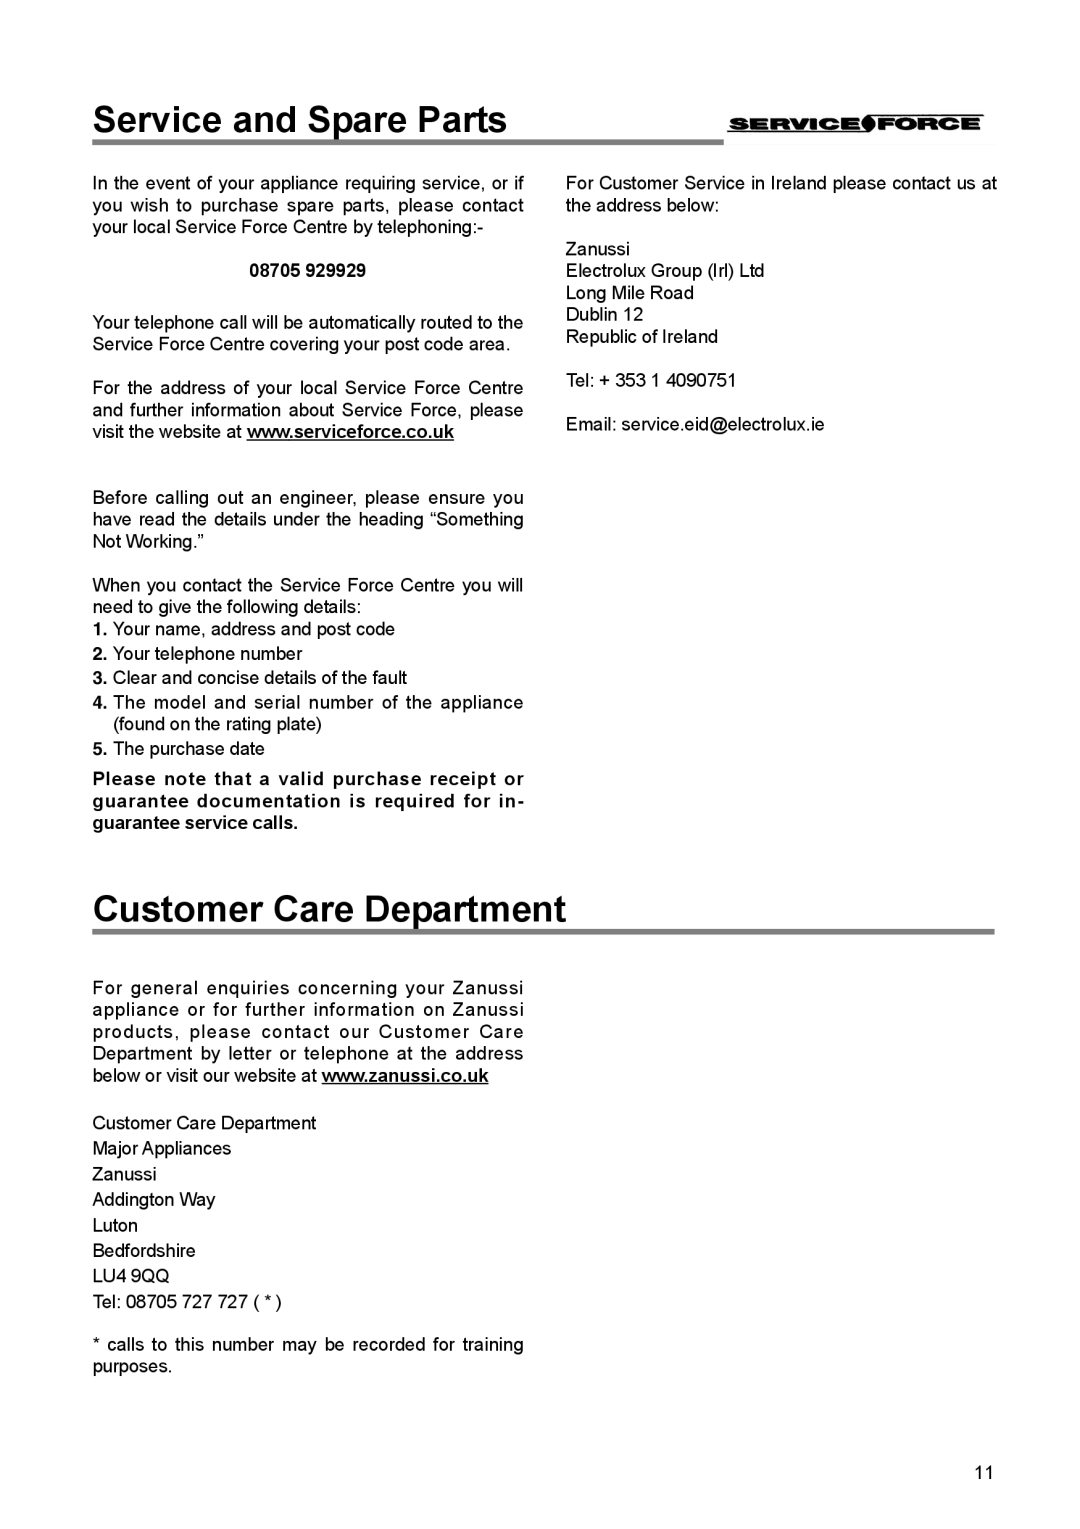 Zanussi ZBF 6114 manual Service and Spare Parts, Customer Care Department 